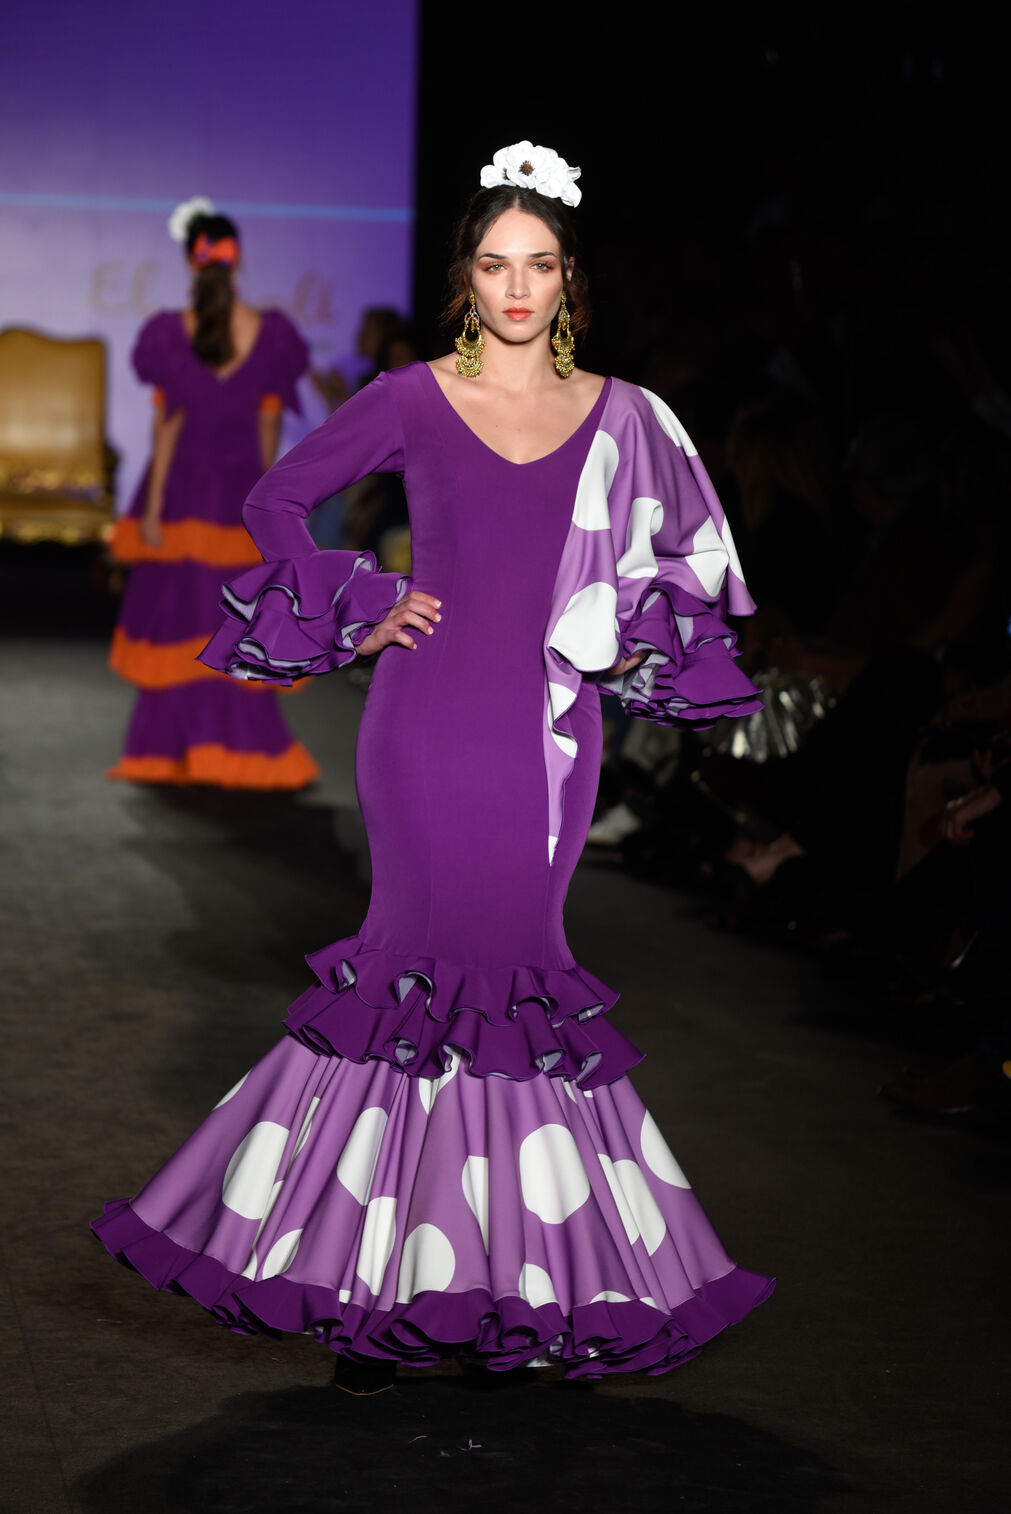 Trajes de Flamenca 2023 - El Ajoli Tienda online de moda flamenca